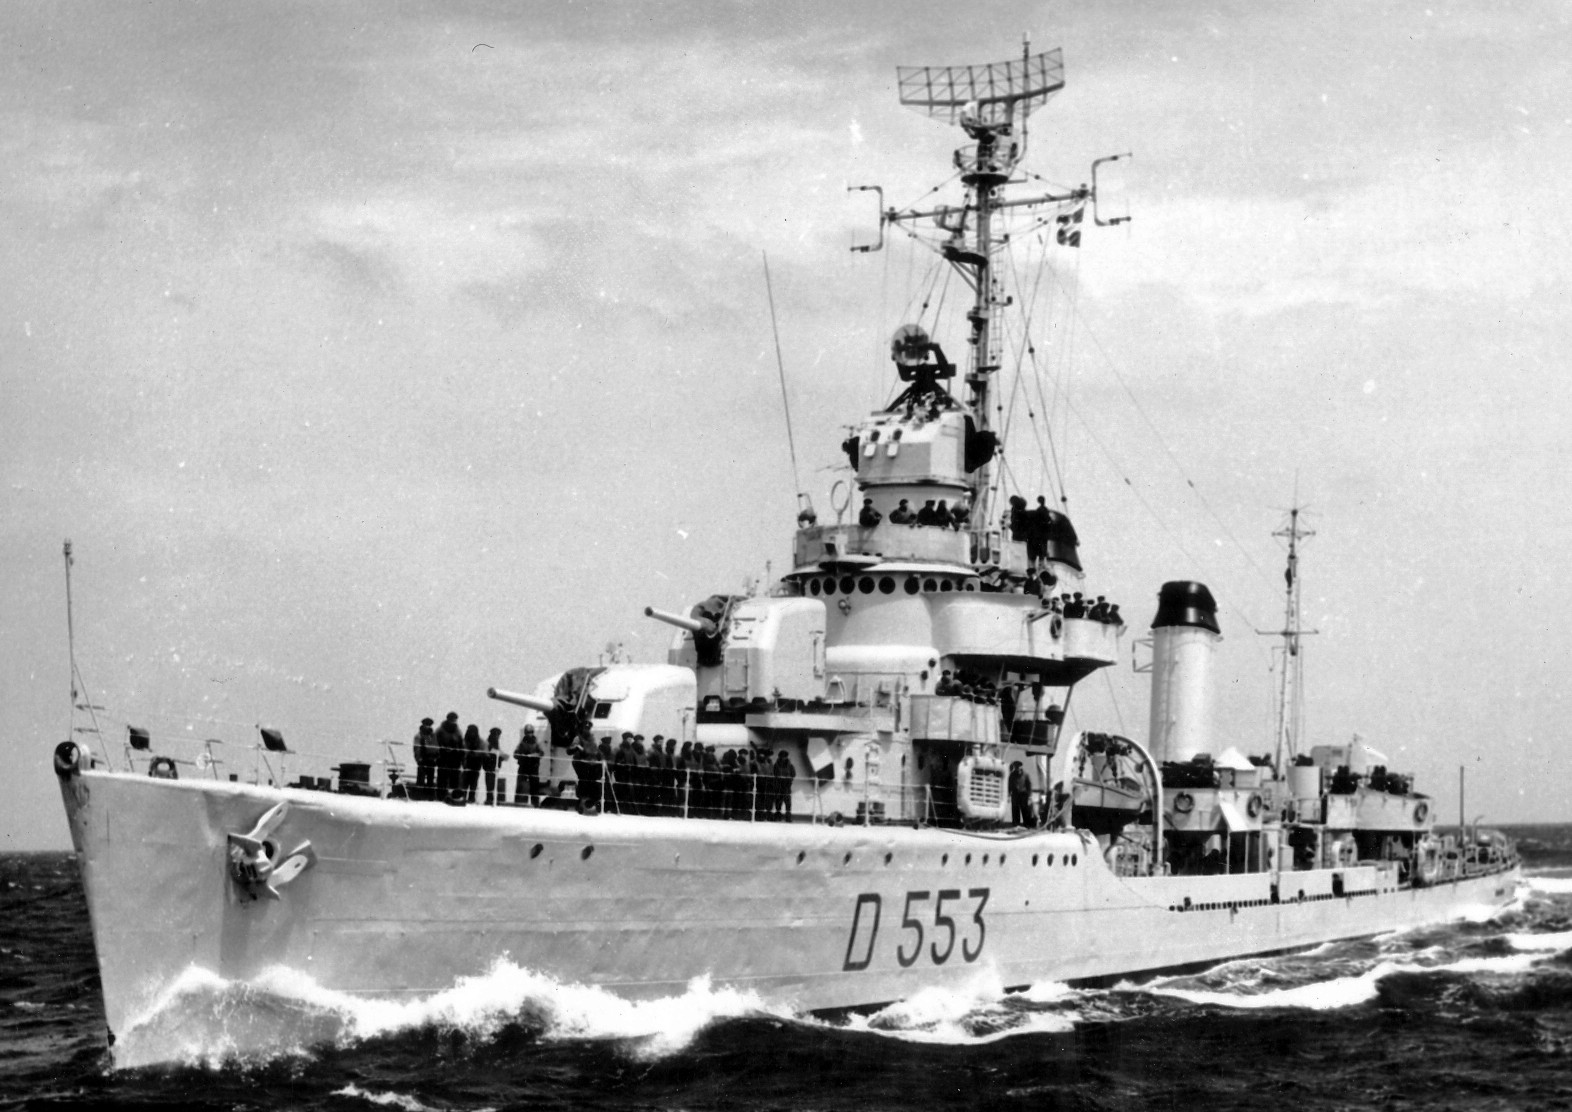 d-553 artigliere nave its destroyer italian navy marina militare 02